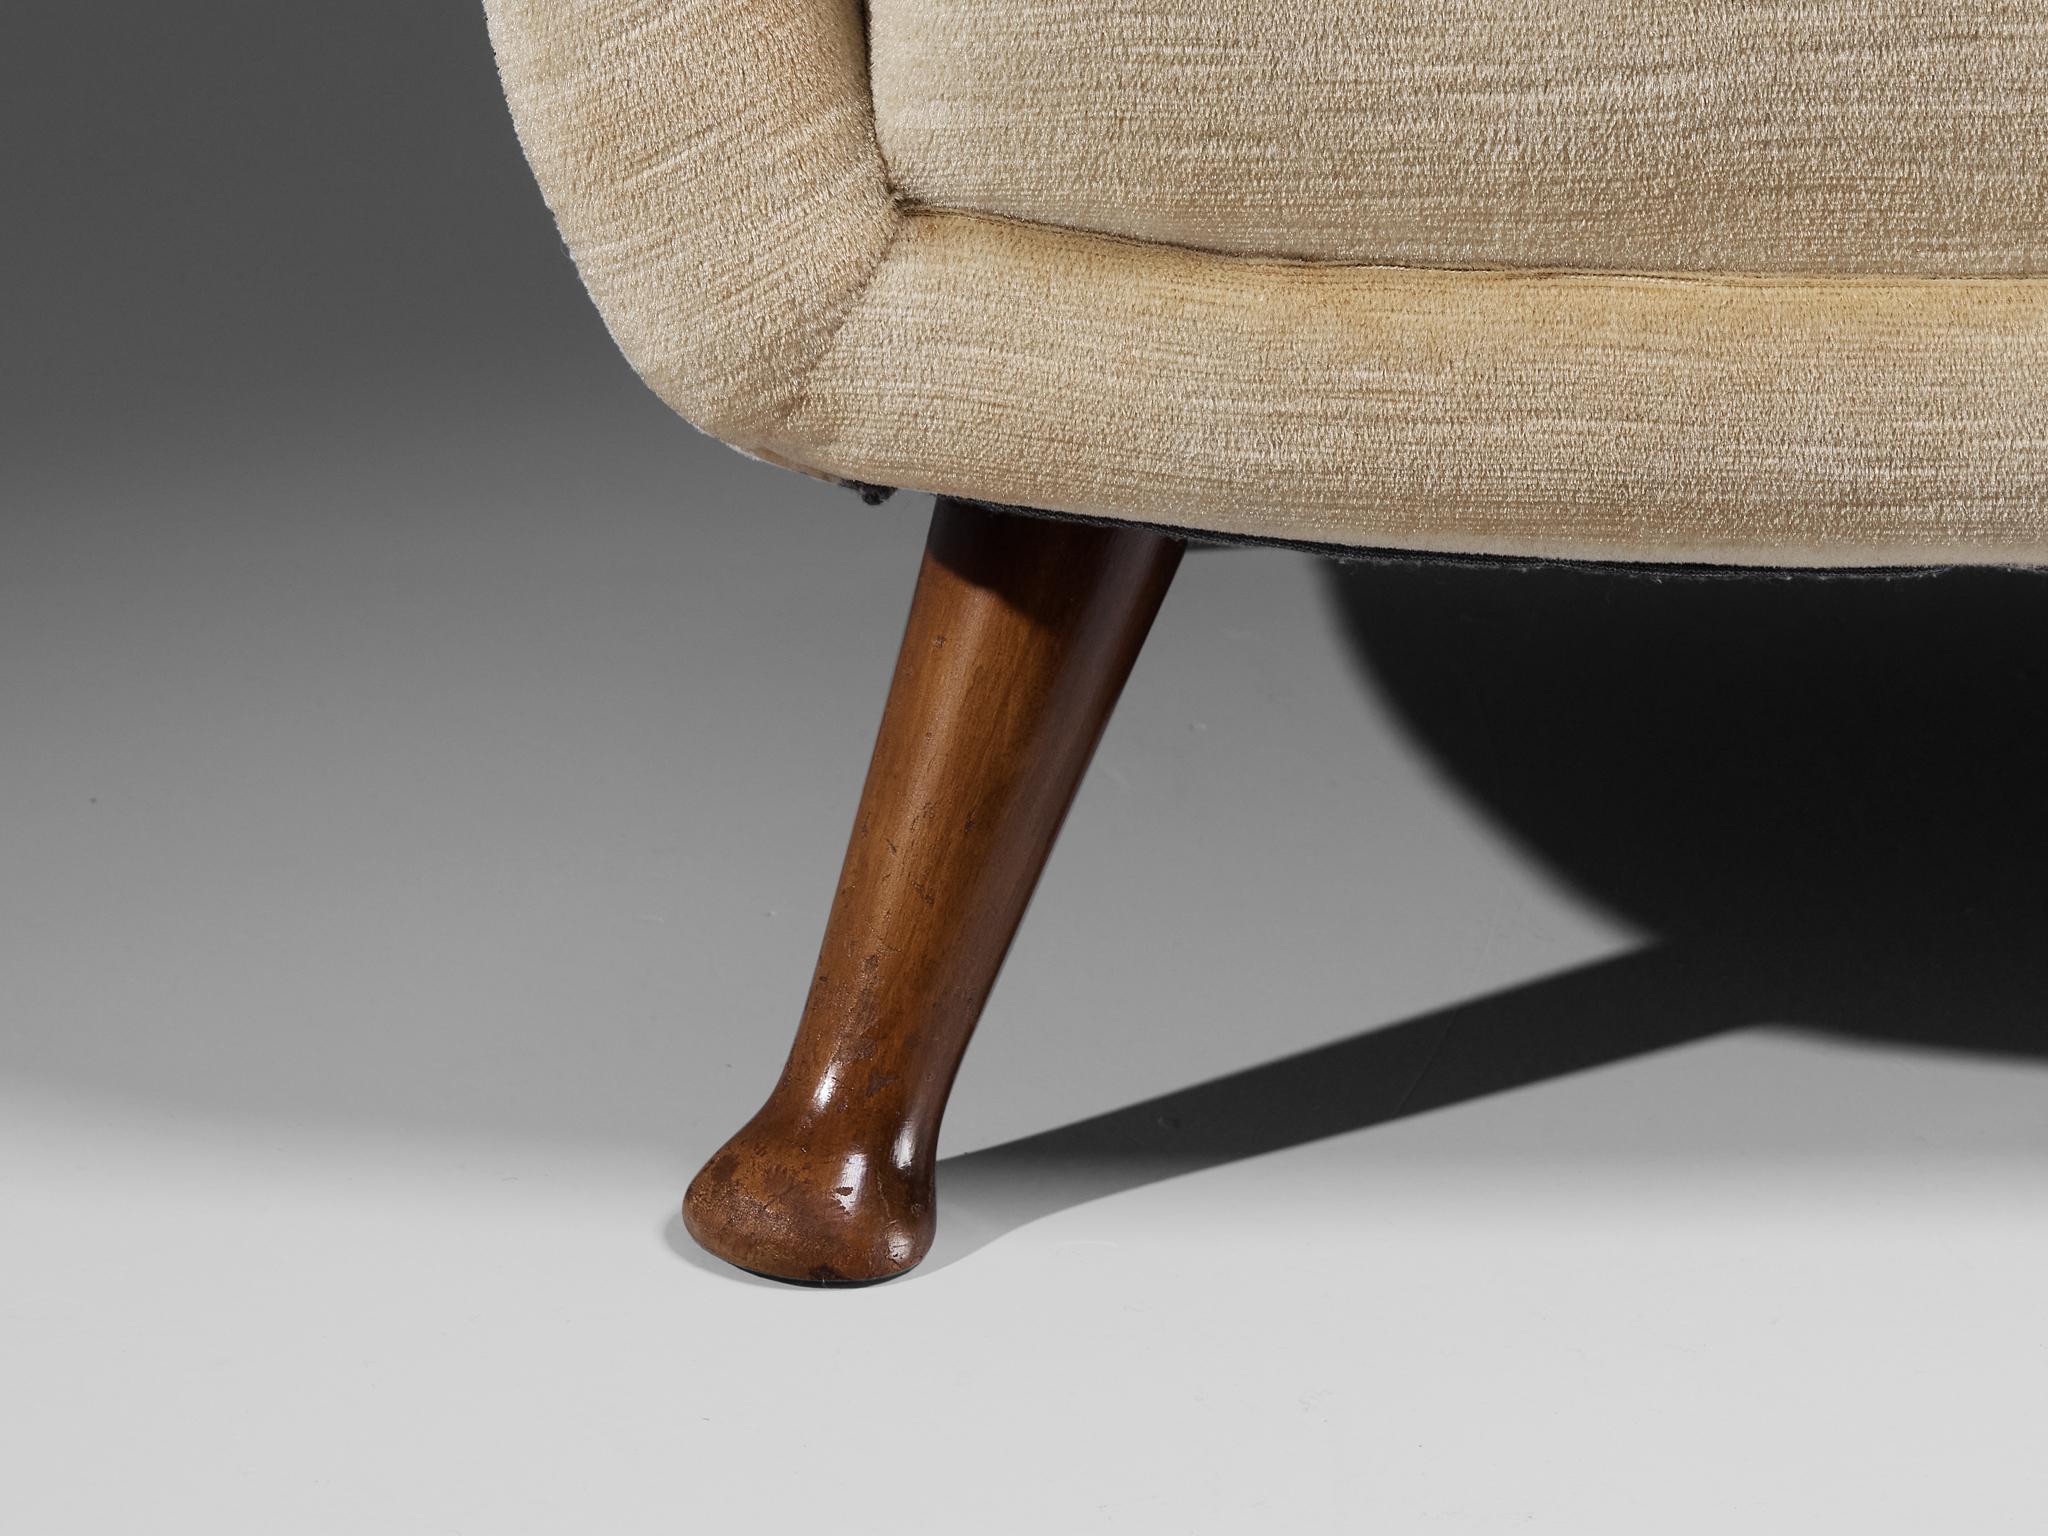 Berga Mobler Sofa in Beige Wool Upholstery